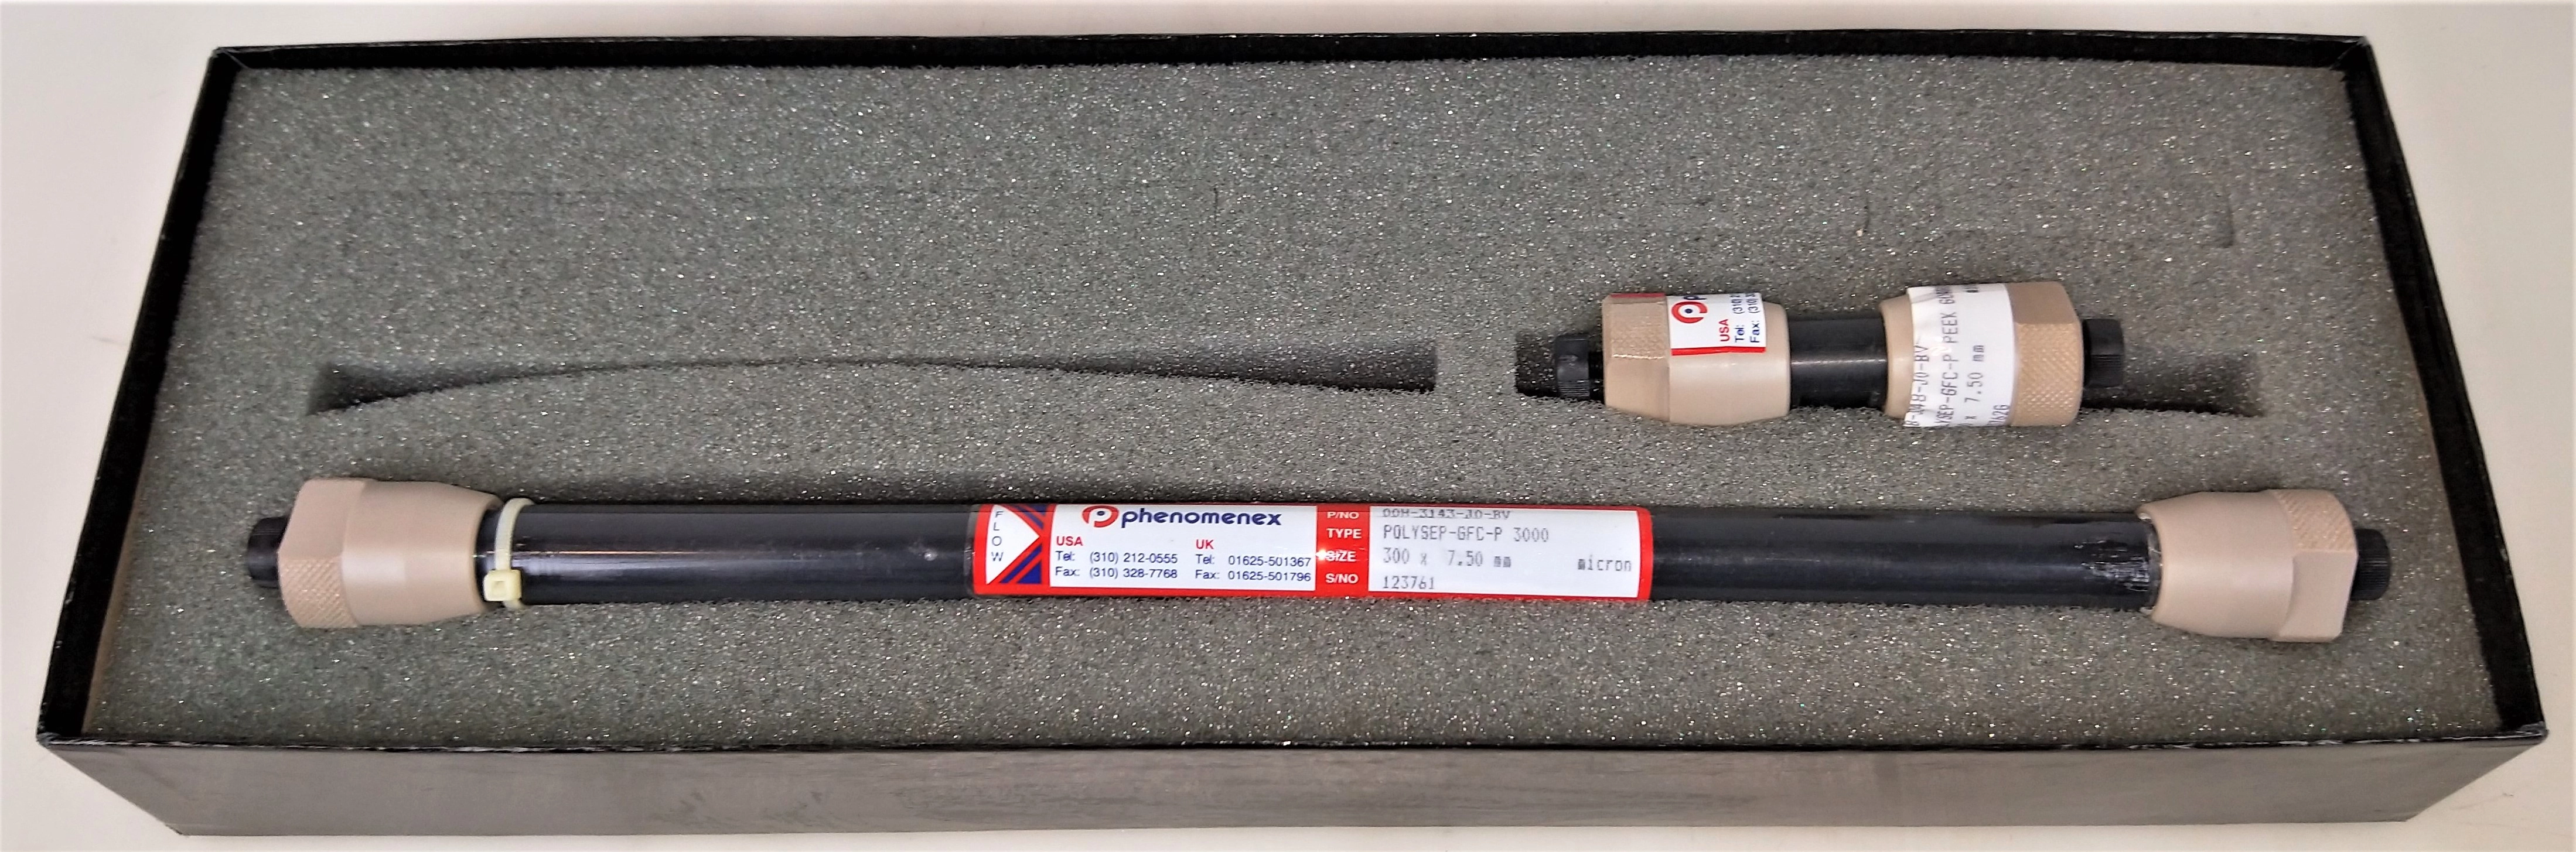 Phenomenex Polysep-GFC-P 3000 HPLC Column with 50mm PEEK Guard - 300mm x 7.5mm